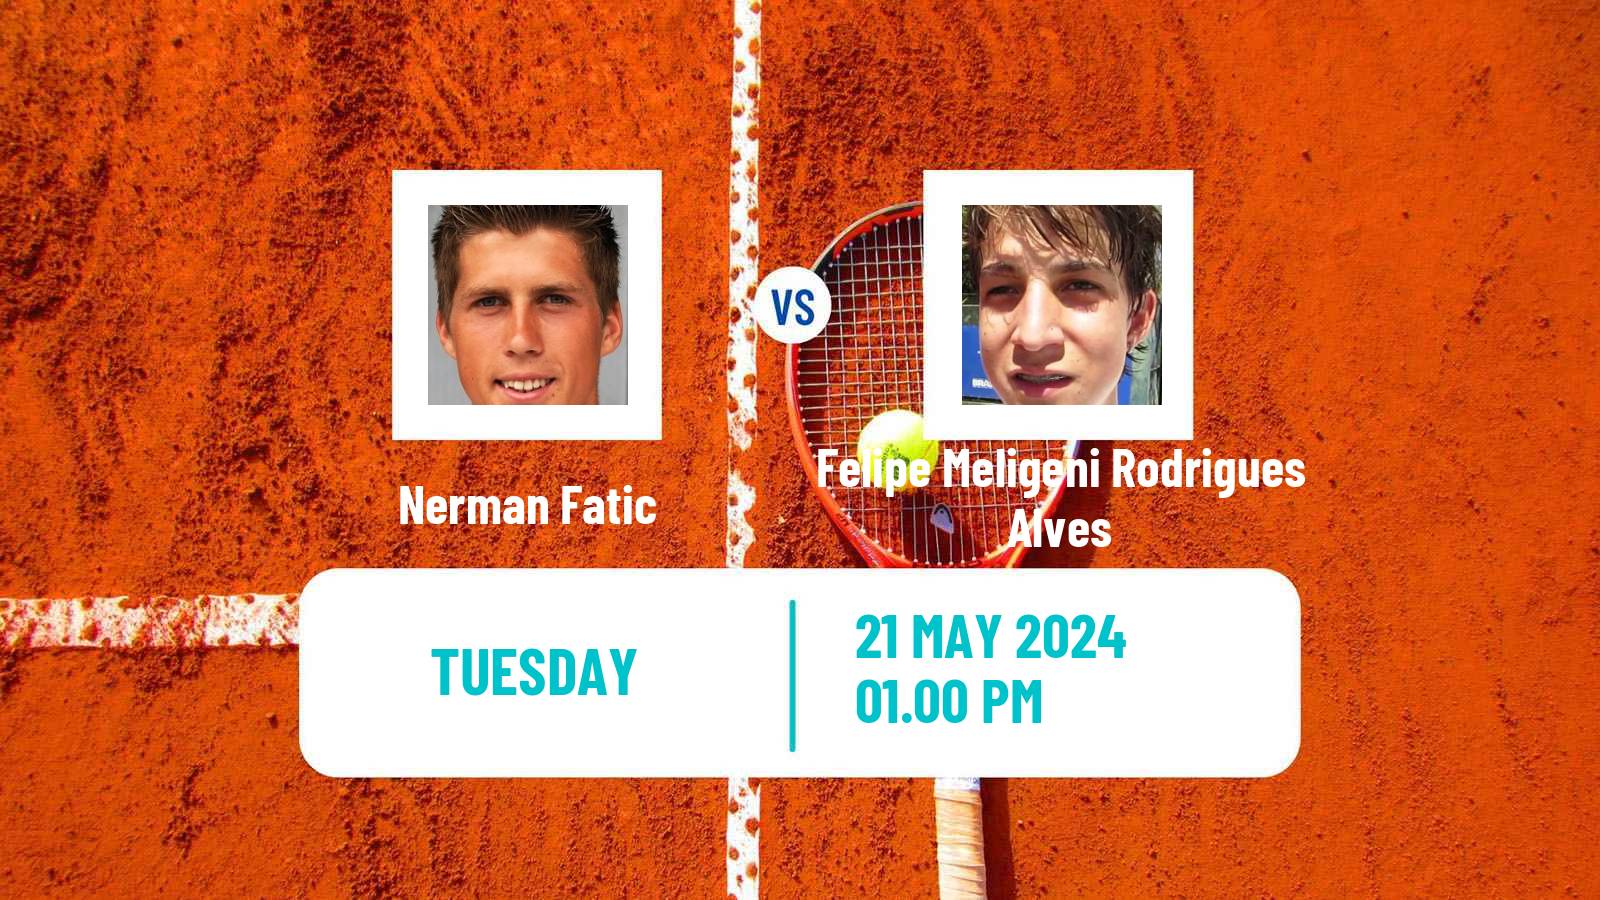 Tennis ATP Roland Garros Nerman Fatic - Felipe Meligeni Rodrigues Alves